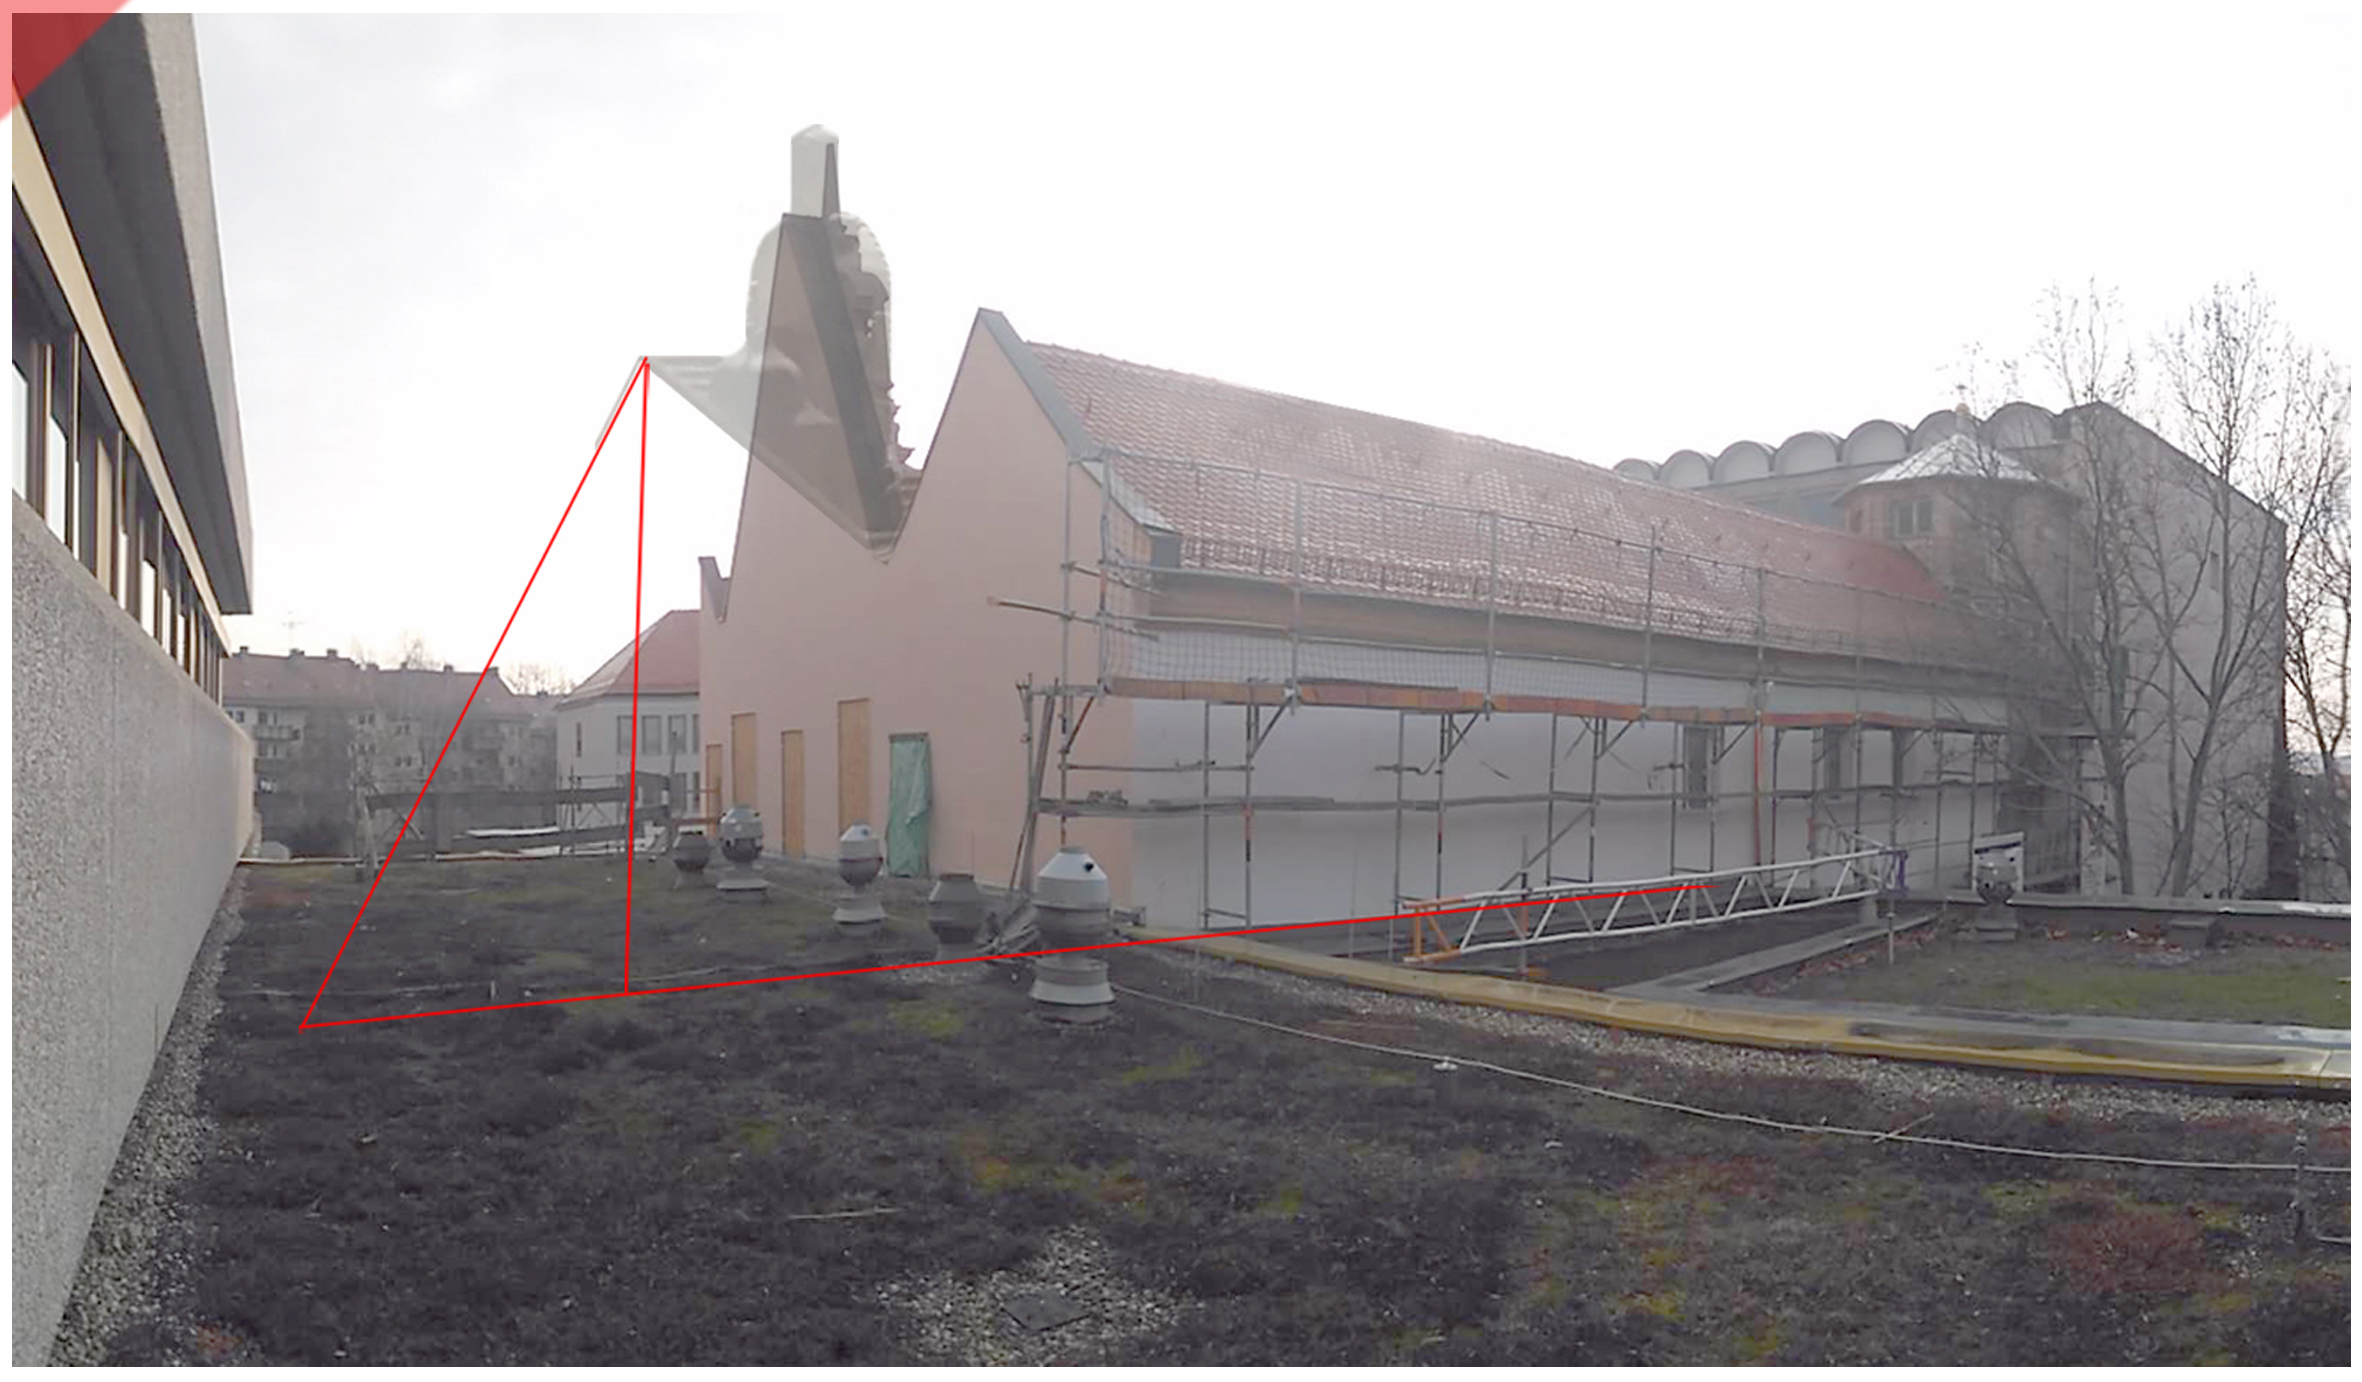 Pellerhaus-Nordgiebel-Innenhof-Dach-Panorama-Hof-Rekonstruktion-Fassade-2019